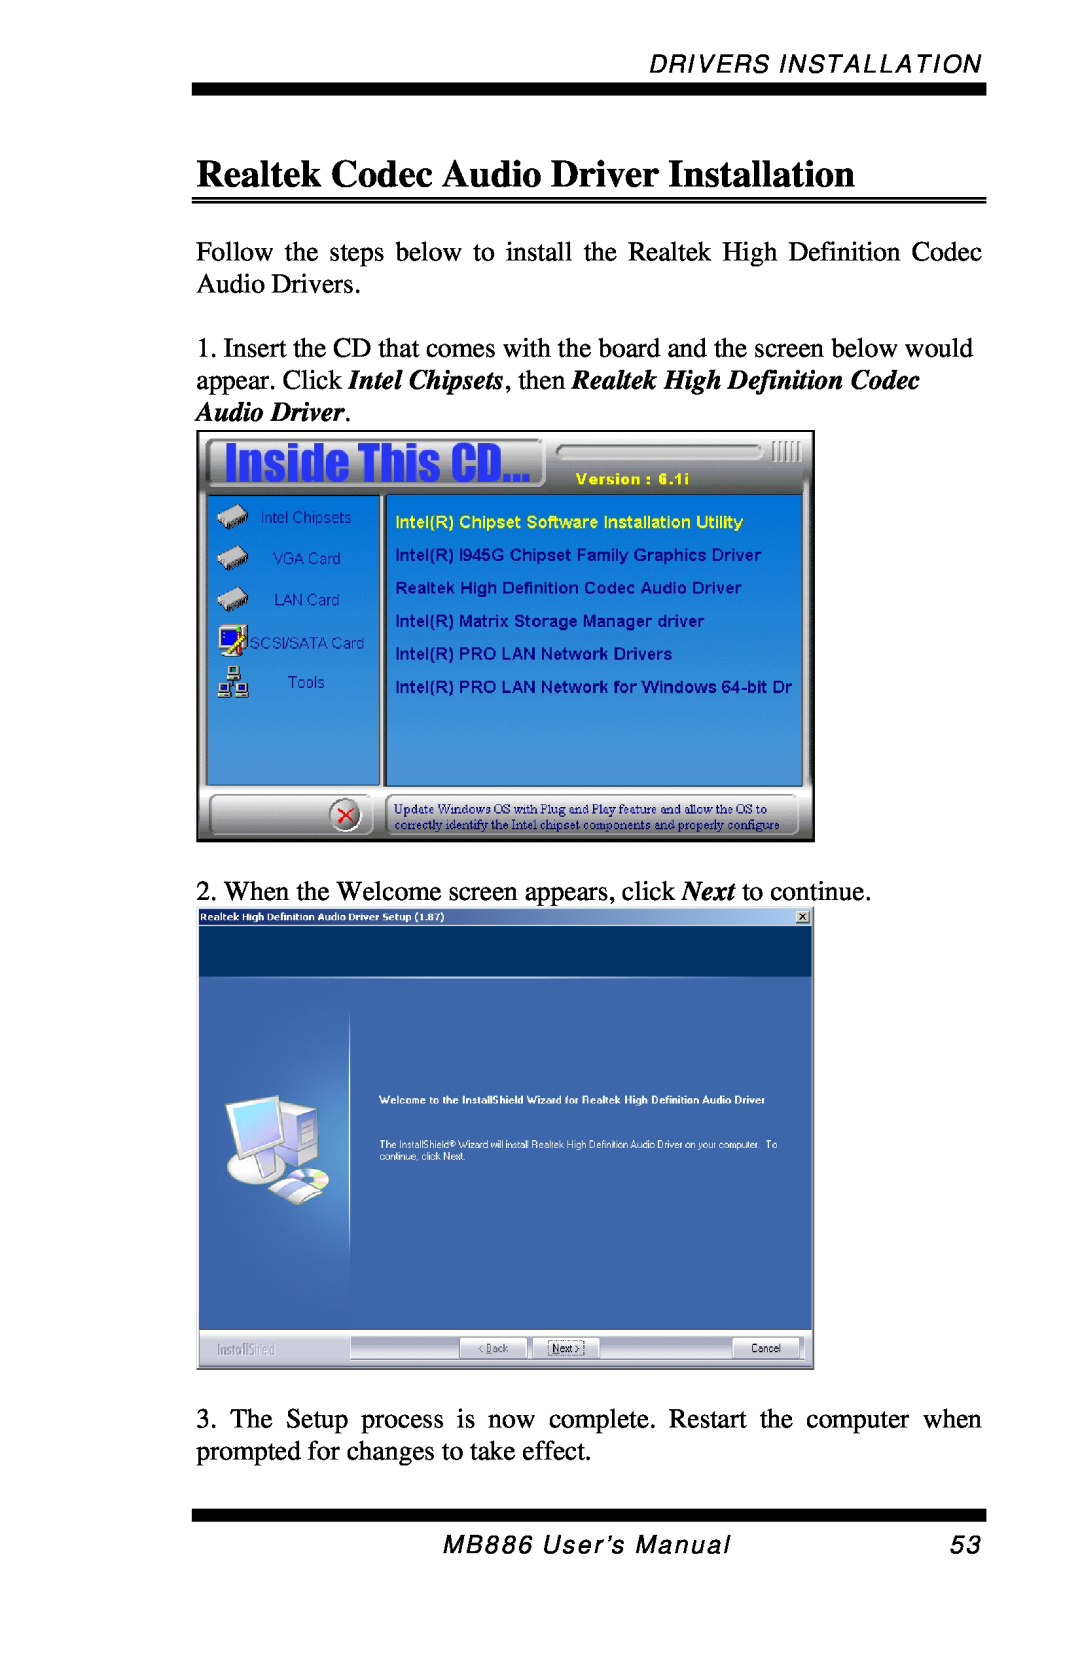 Intel MB886 user manual Realtek Codec Audio Driver Installation, Drivers Installation 